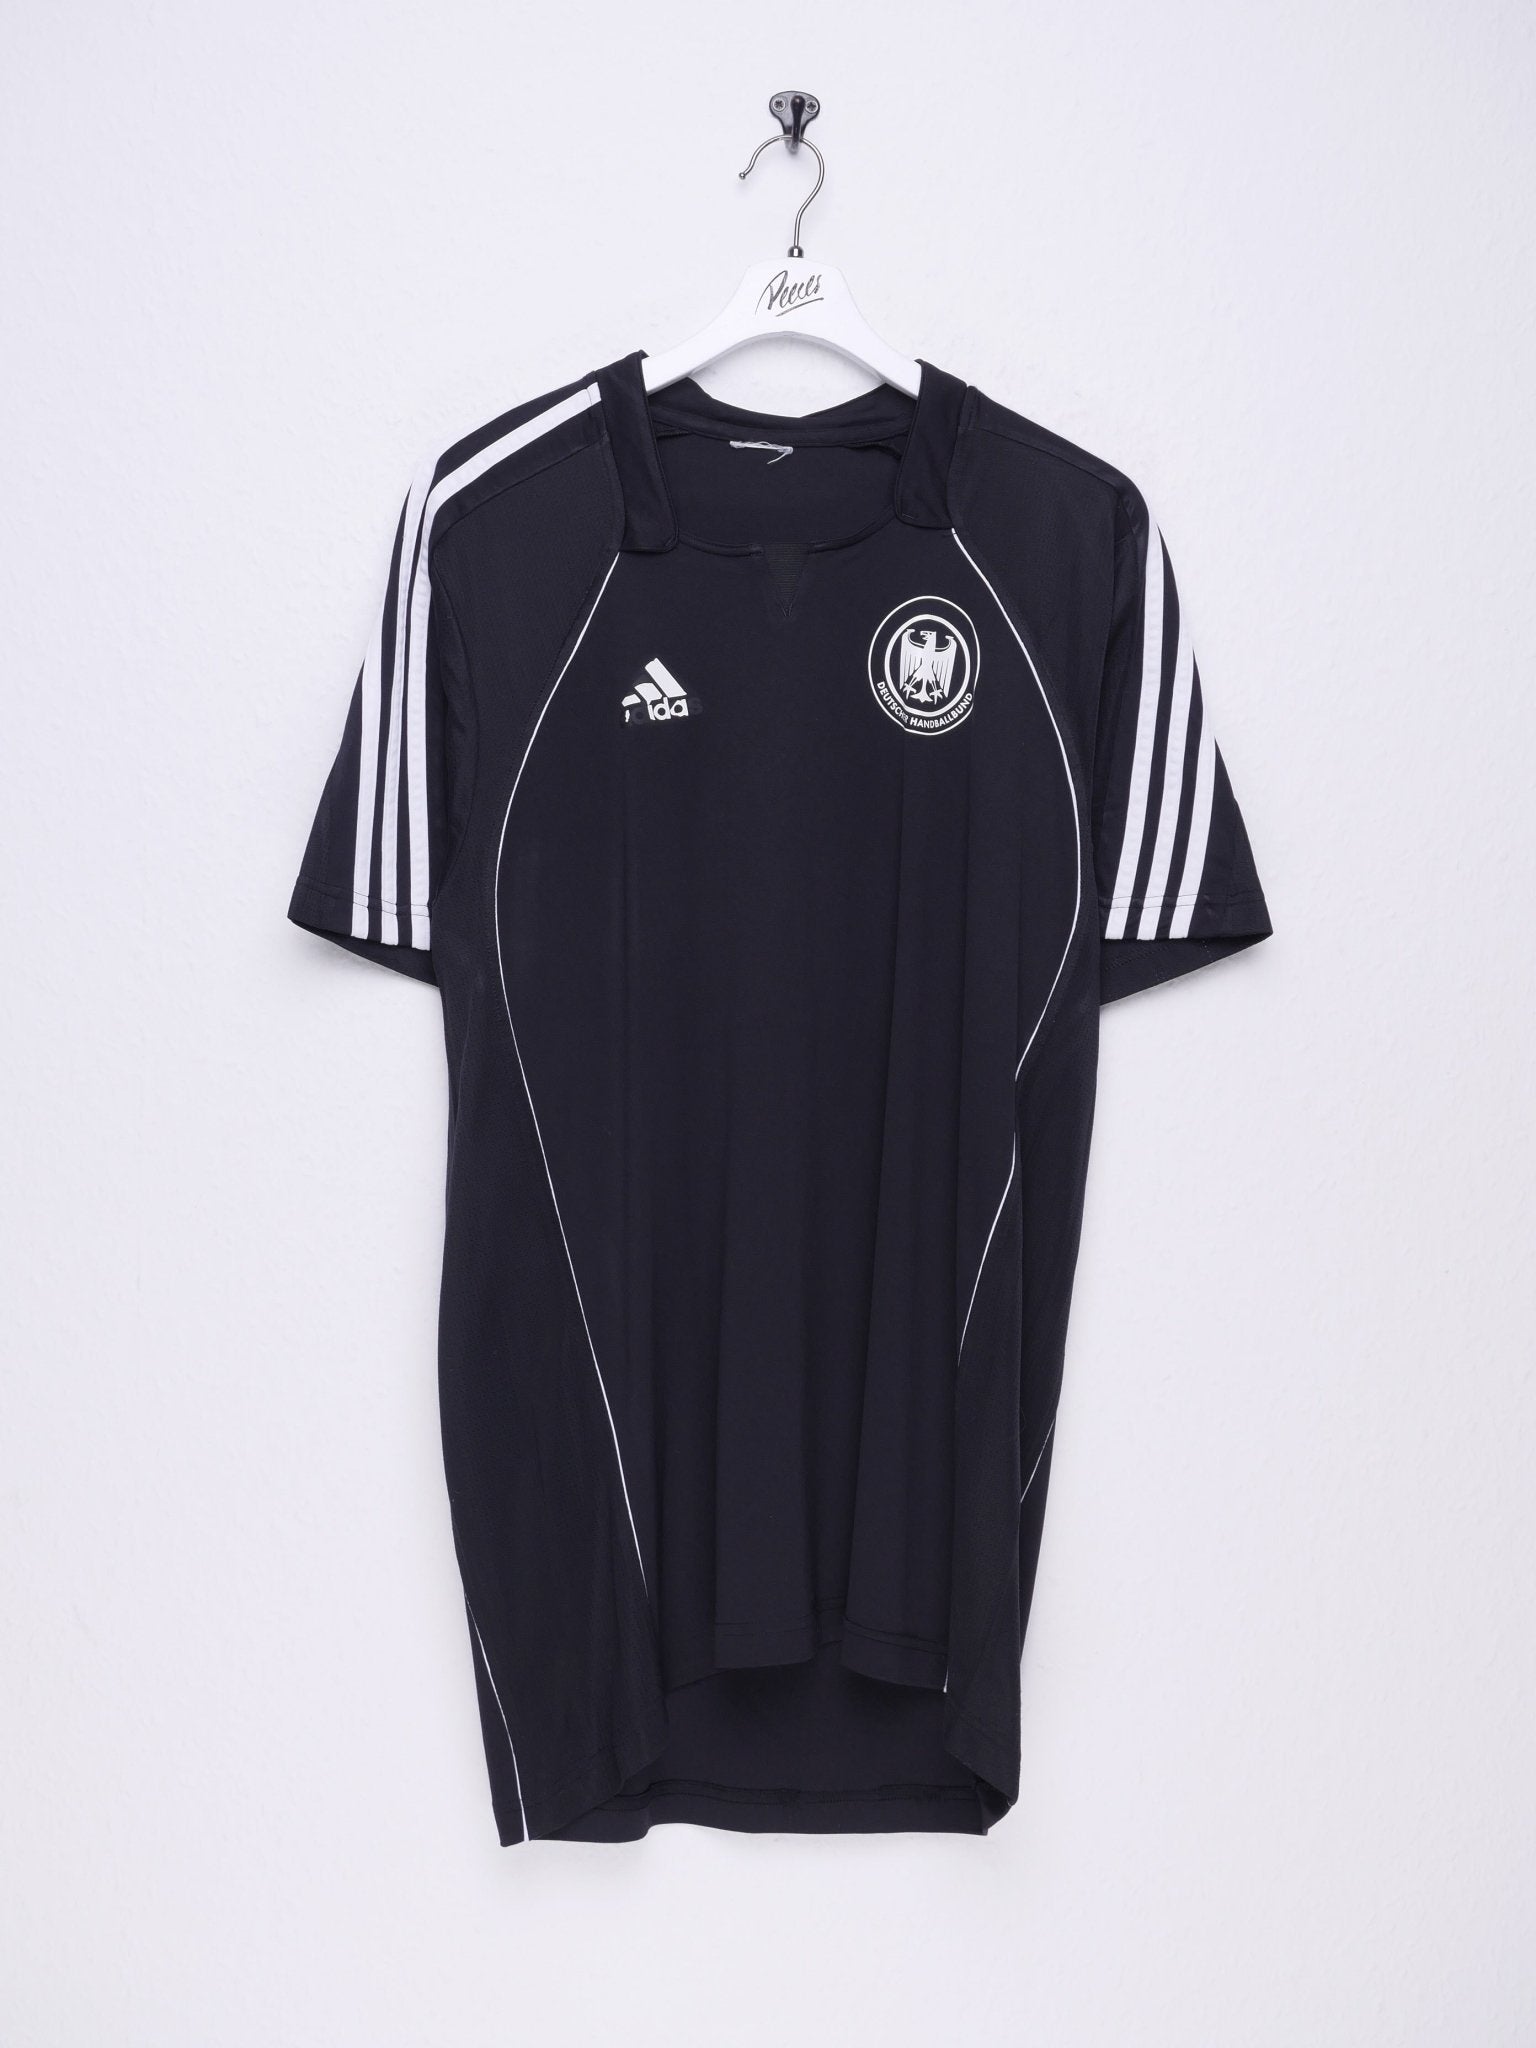 adidas printed Logo black DFB Soccer Jersey Shirt - Peeces